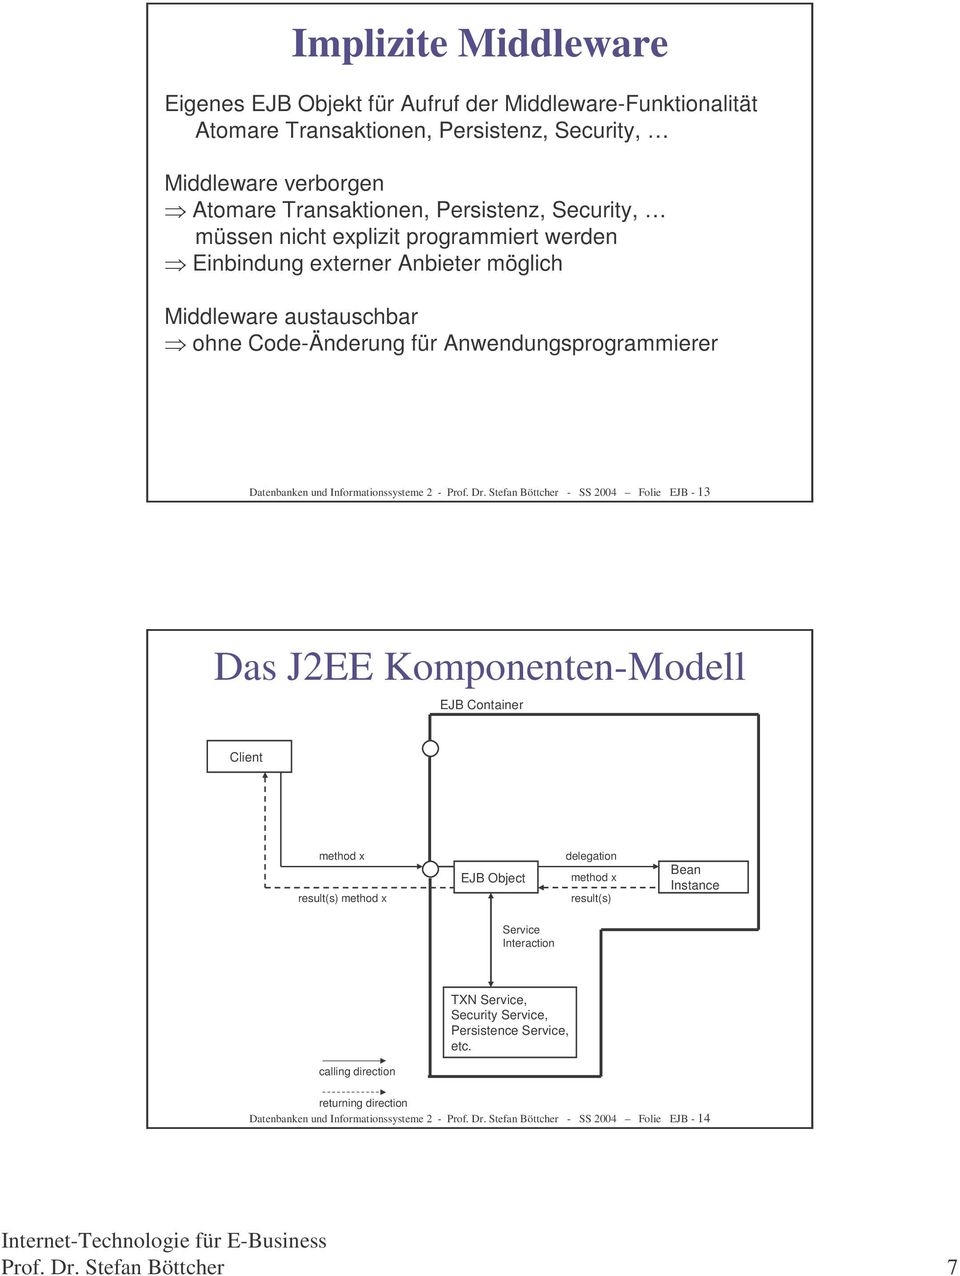 Stefan Böttcher - SS 2004 Folie EJB - 13 Das J2EE Komponenten-Modell EJB Container Client method x result(s) method x EJB Object delegation method x result(s) Bean Instance Service Interaction TXN